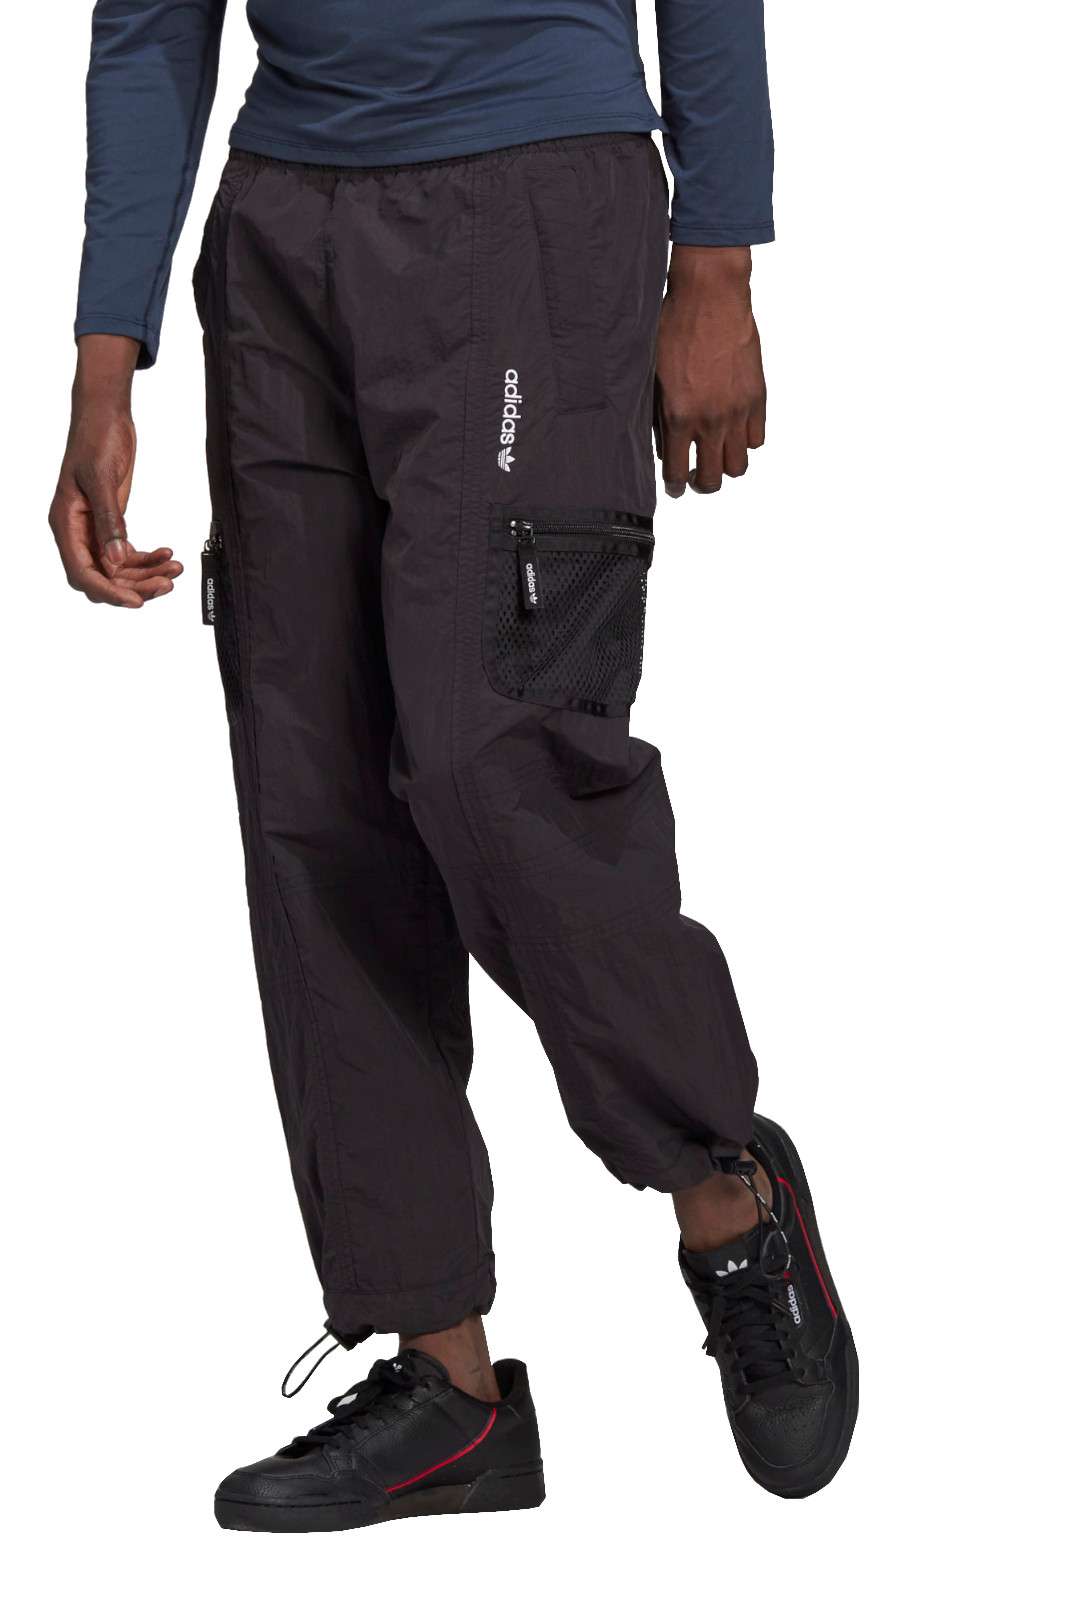 Adidas men's ADVENTURE WOVEN CARGO trousers